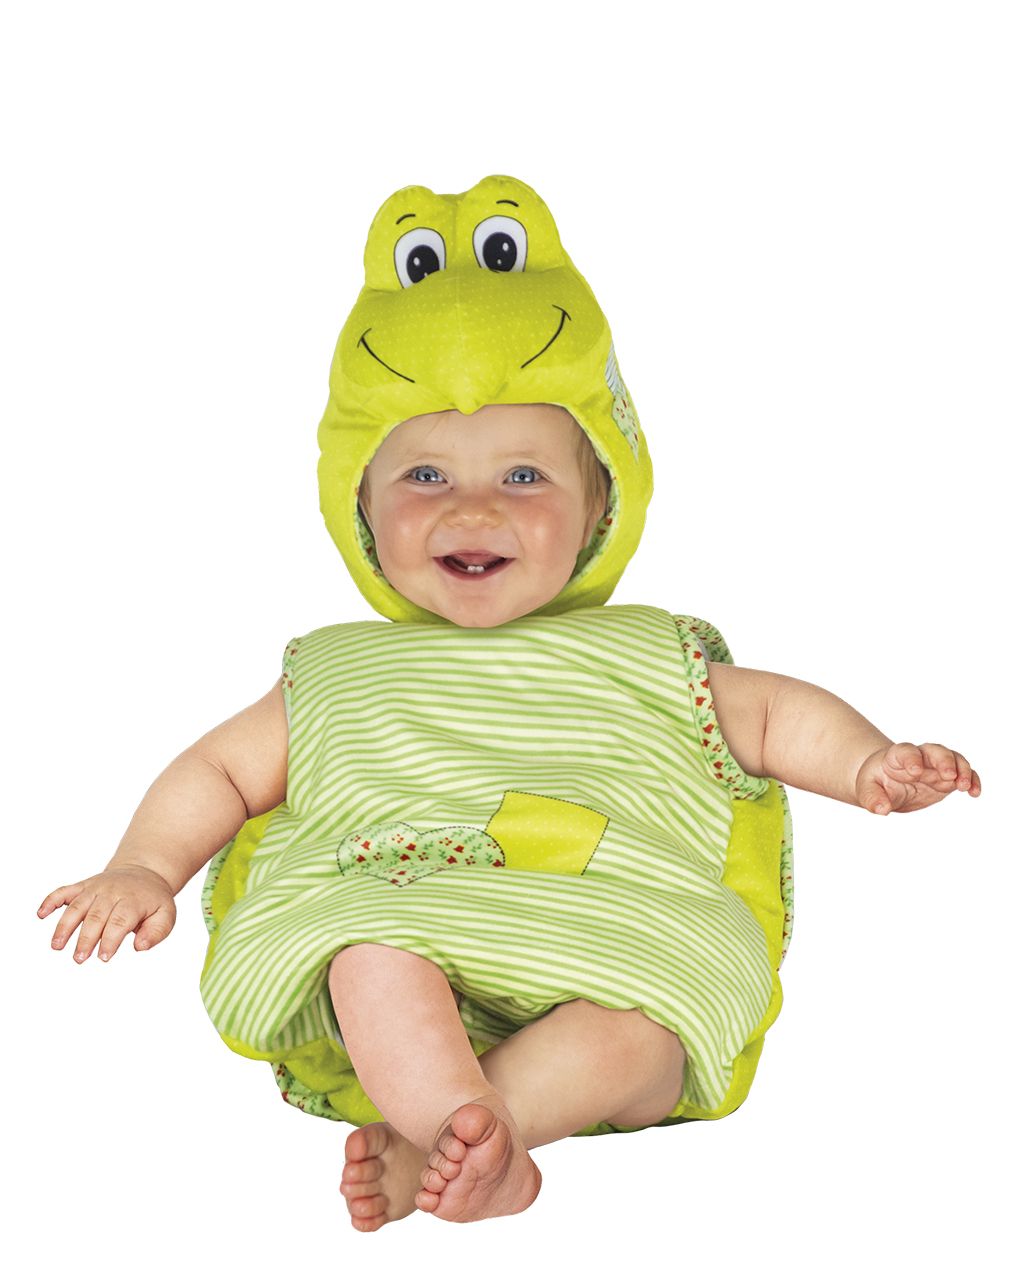 Comprar Disfraz Baby Fresa bolsa 6-12 meses Disfraz infantil online